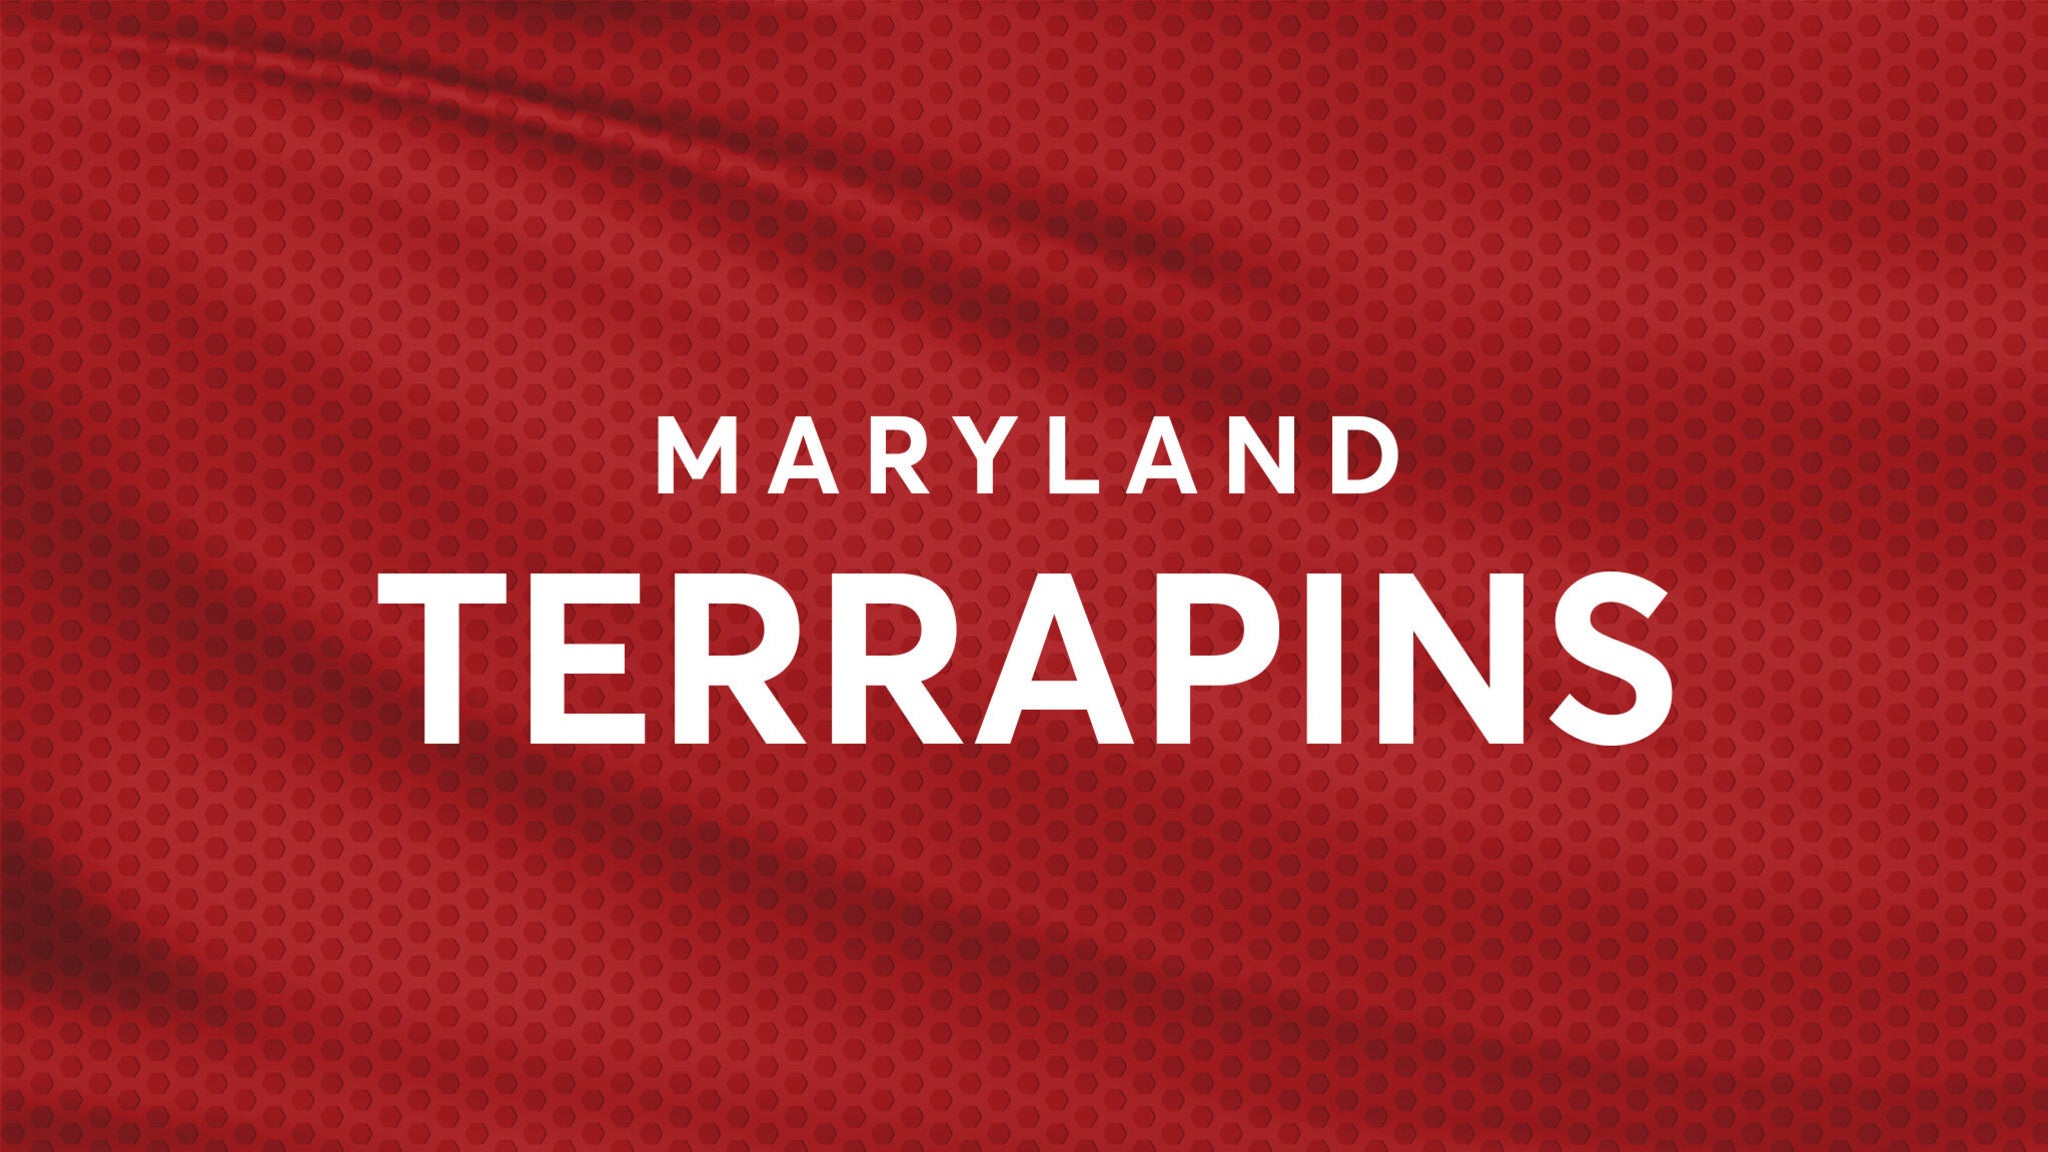 Maryland Terrapins Football vs. Purdue Boilermakers Football